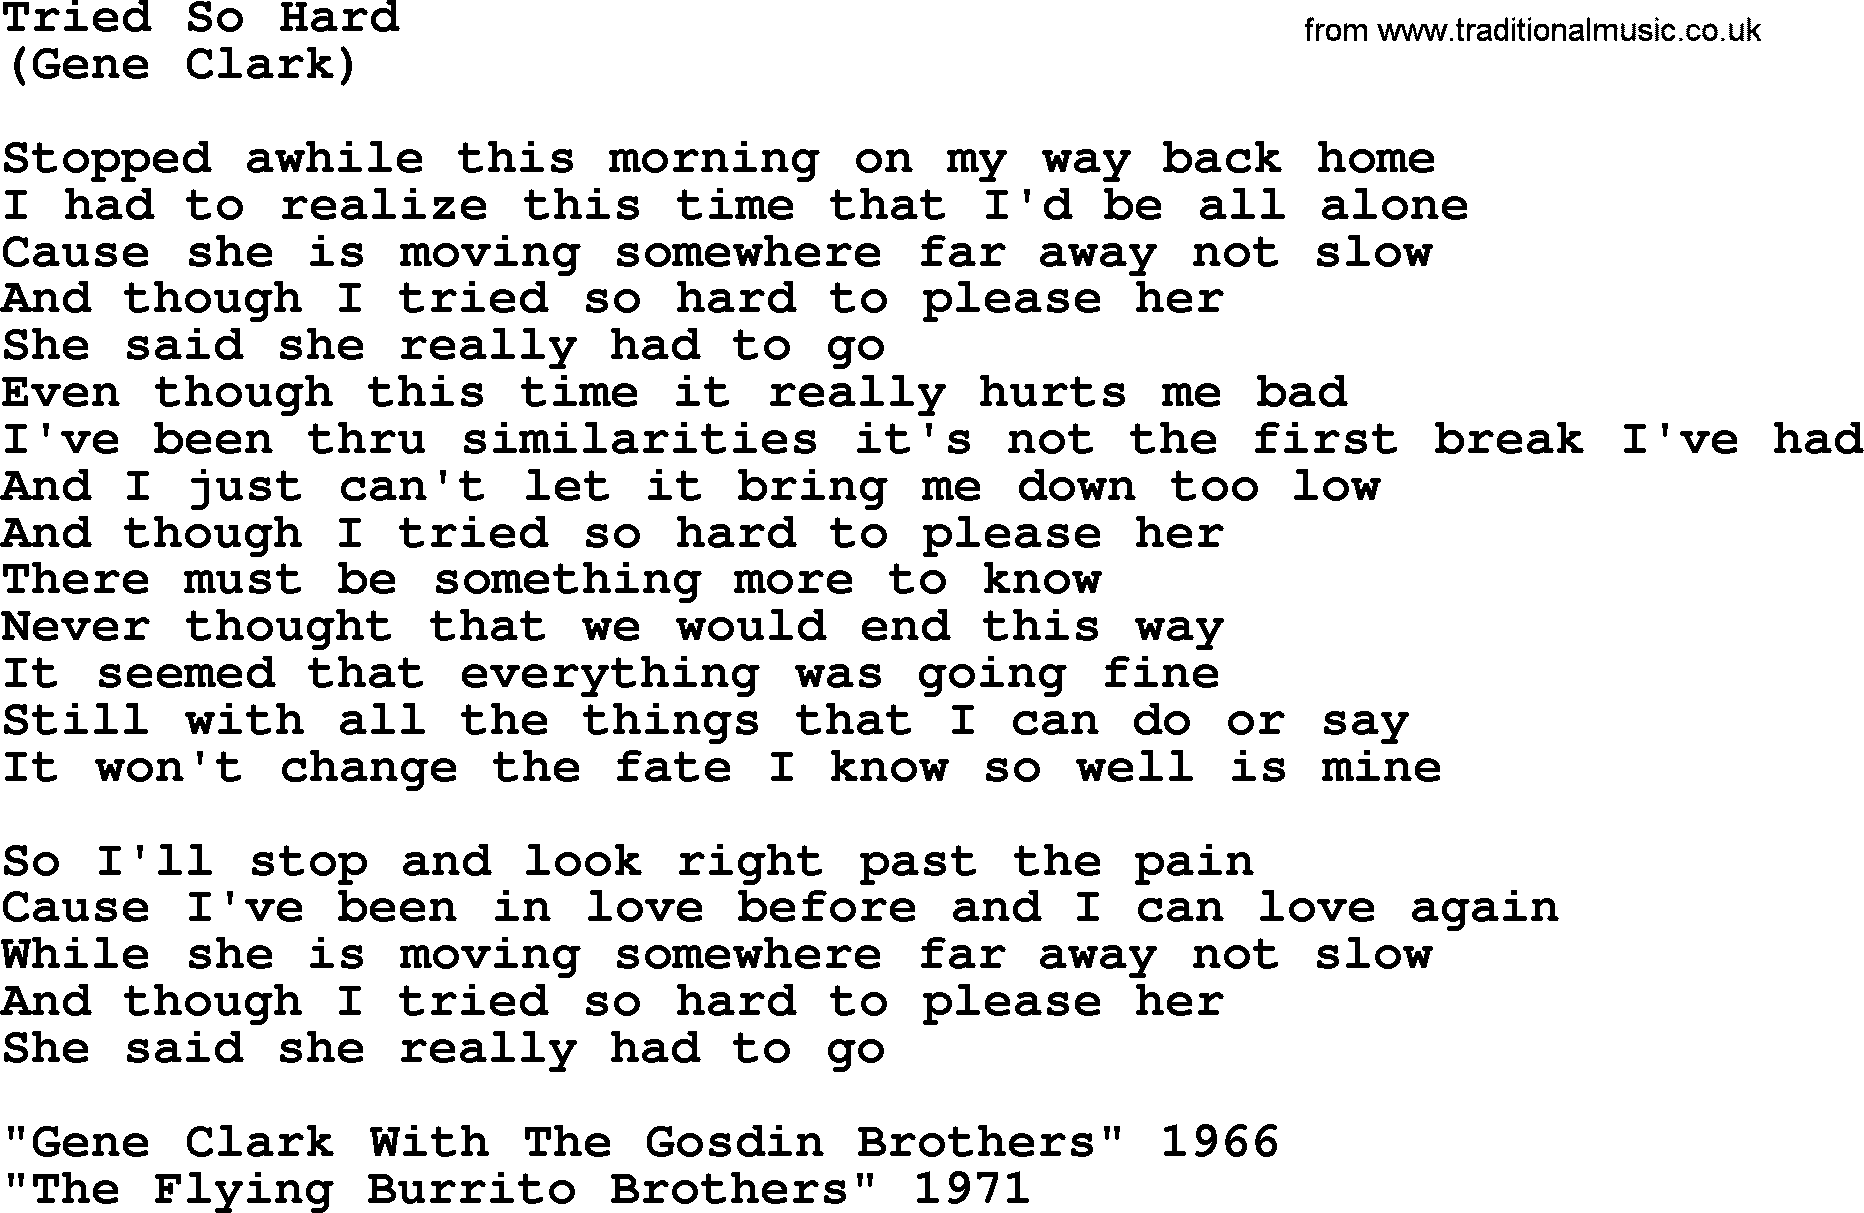 The Byrds song Tried So Hard, lyrics